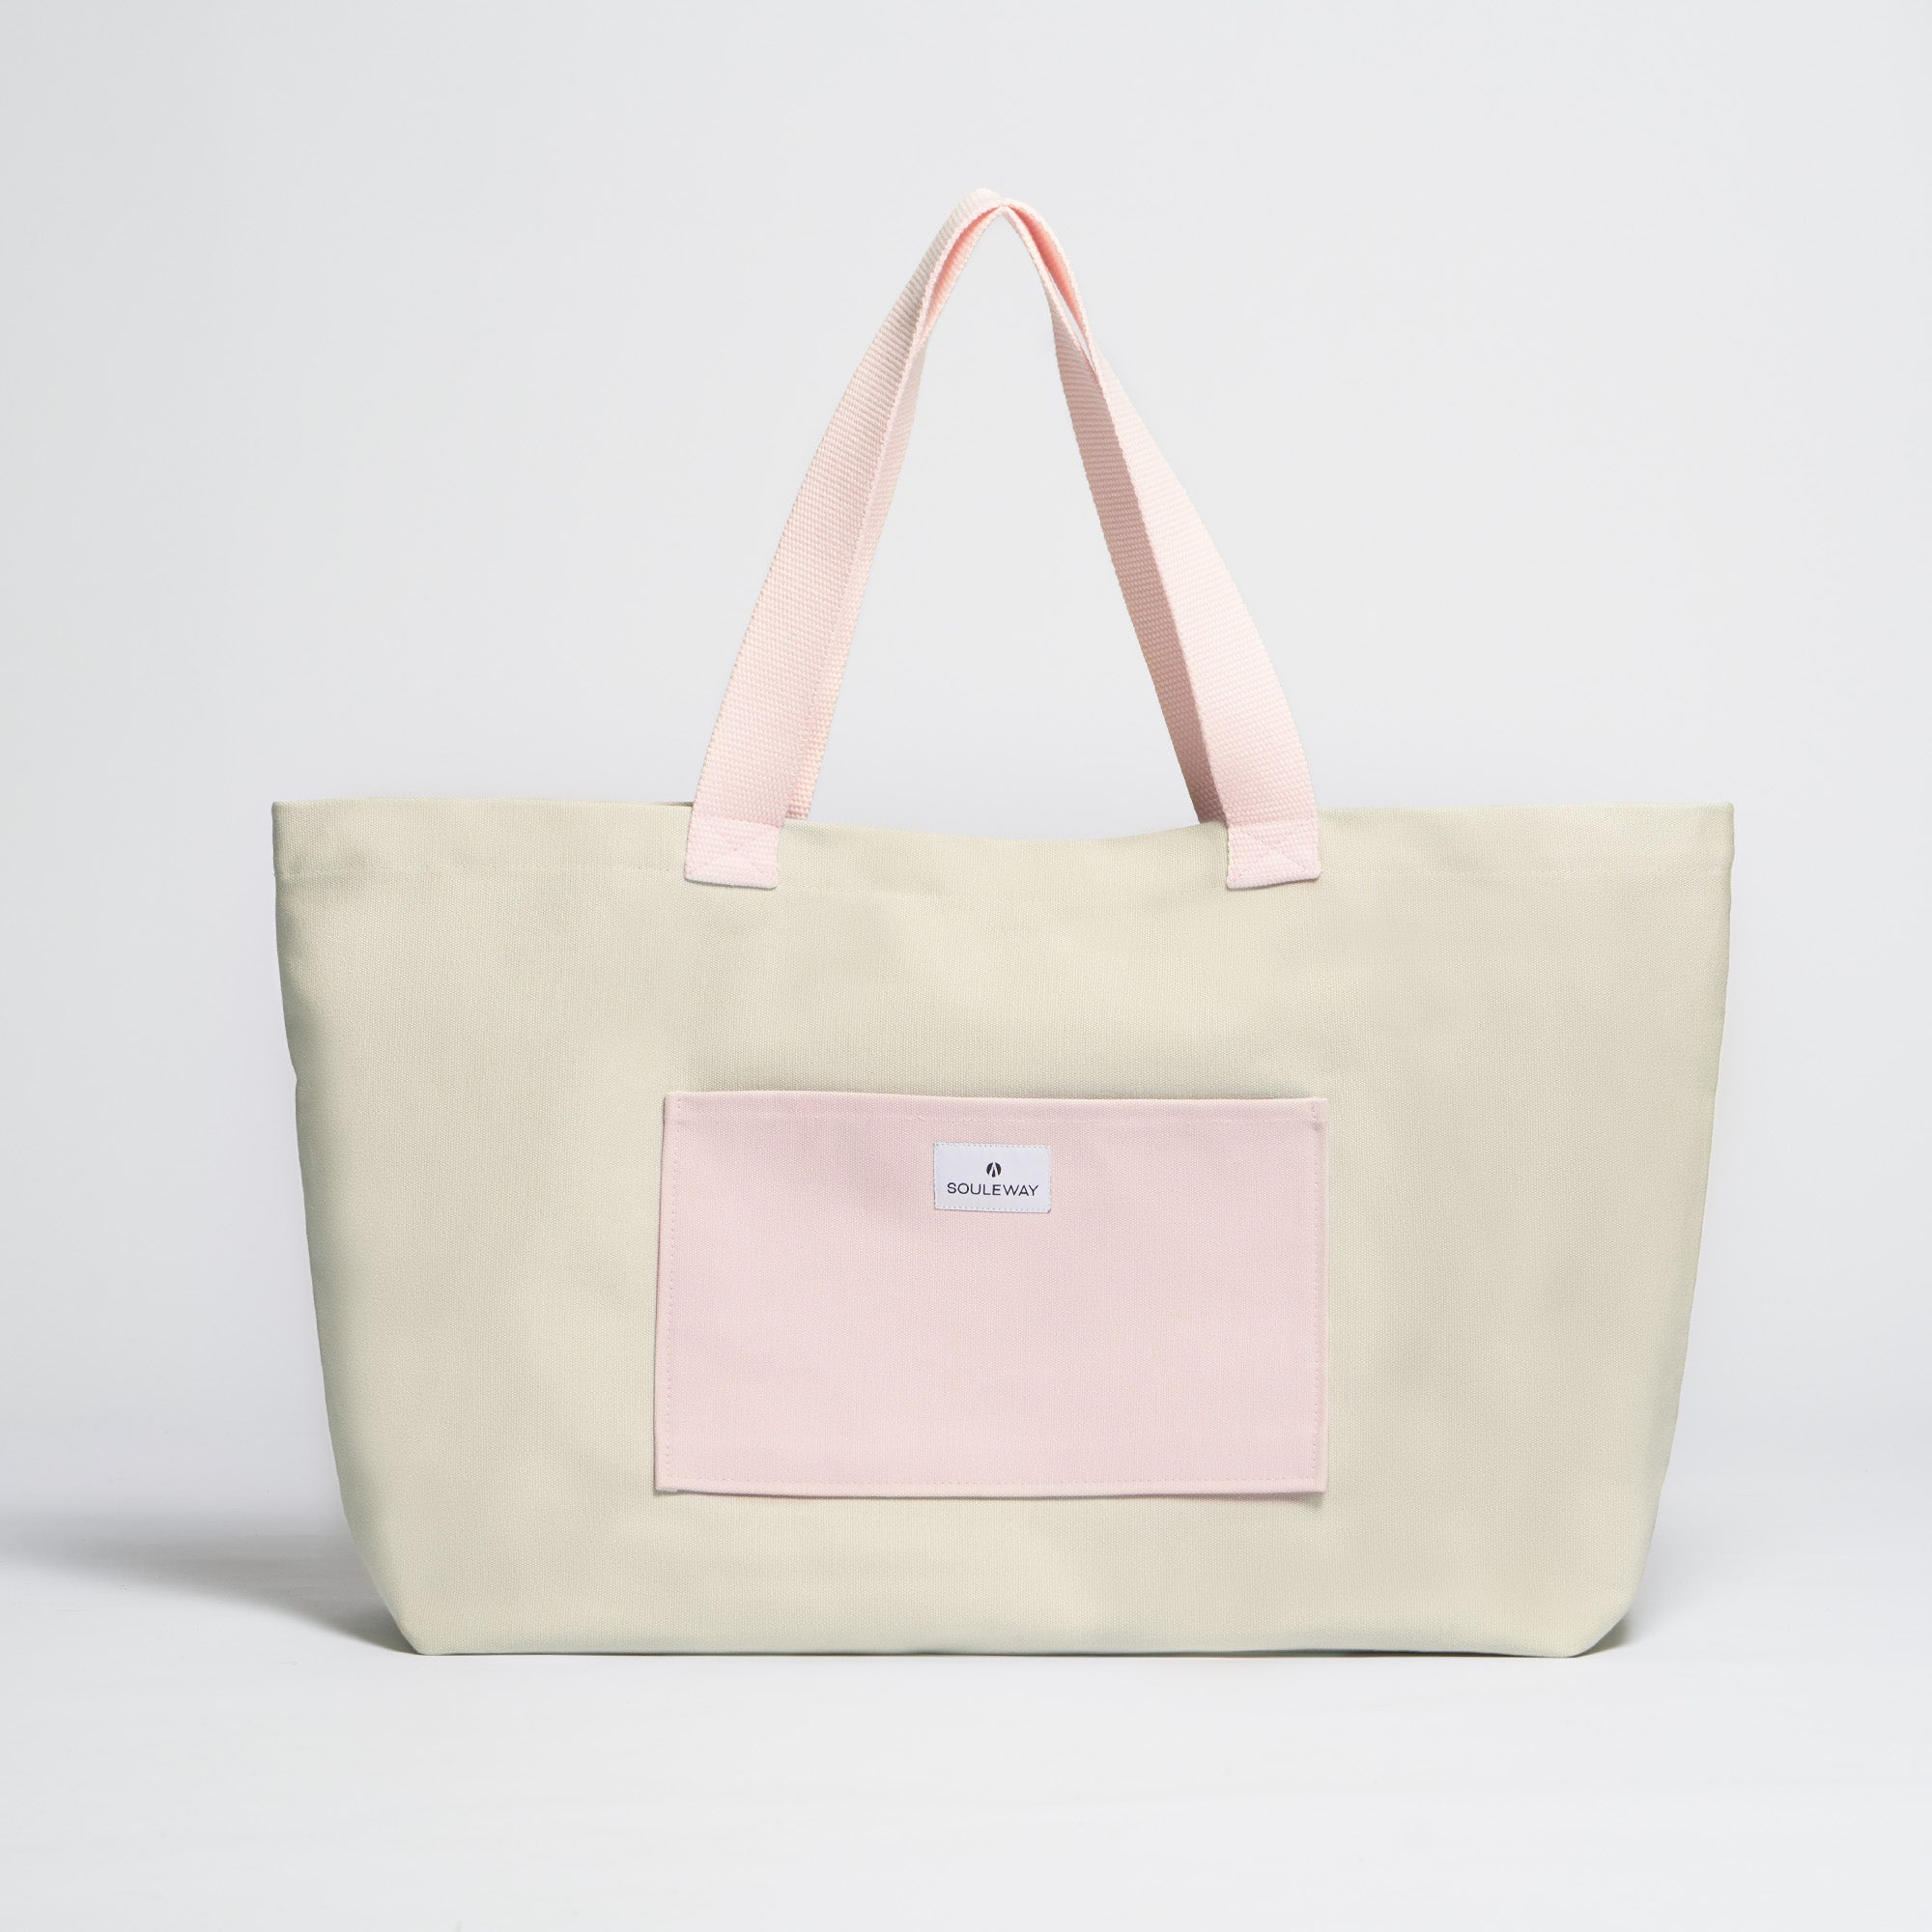 Sand/Pink--skip || Tote Bag - Shopper - Canvas